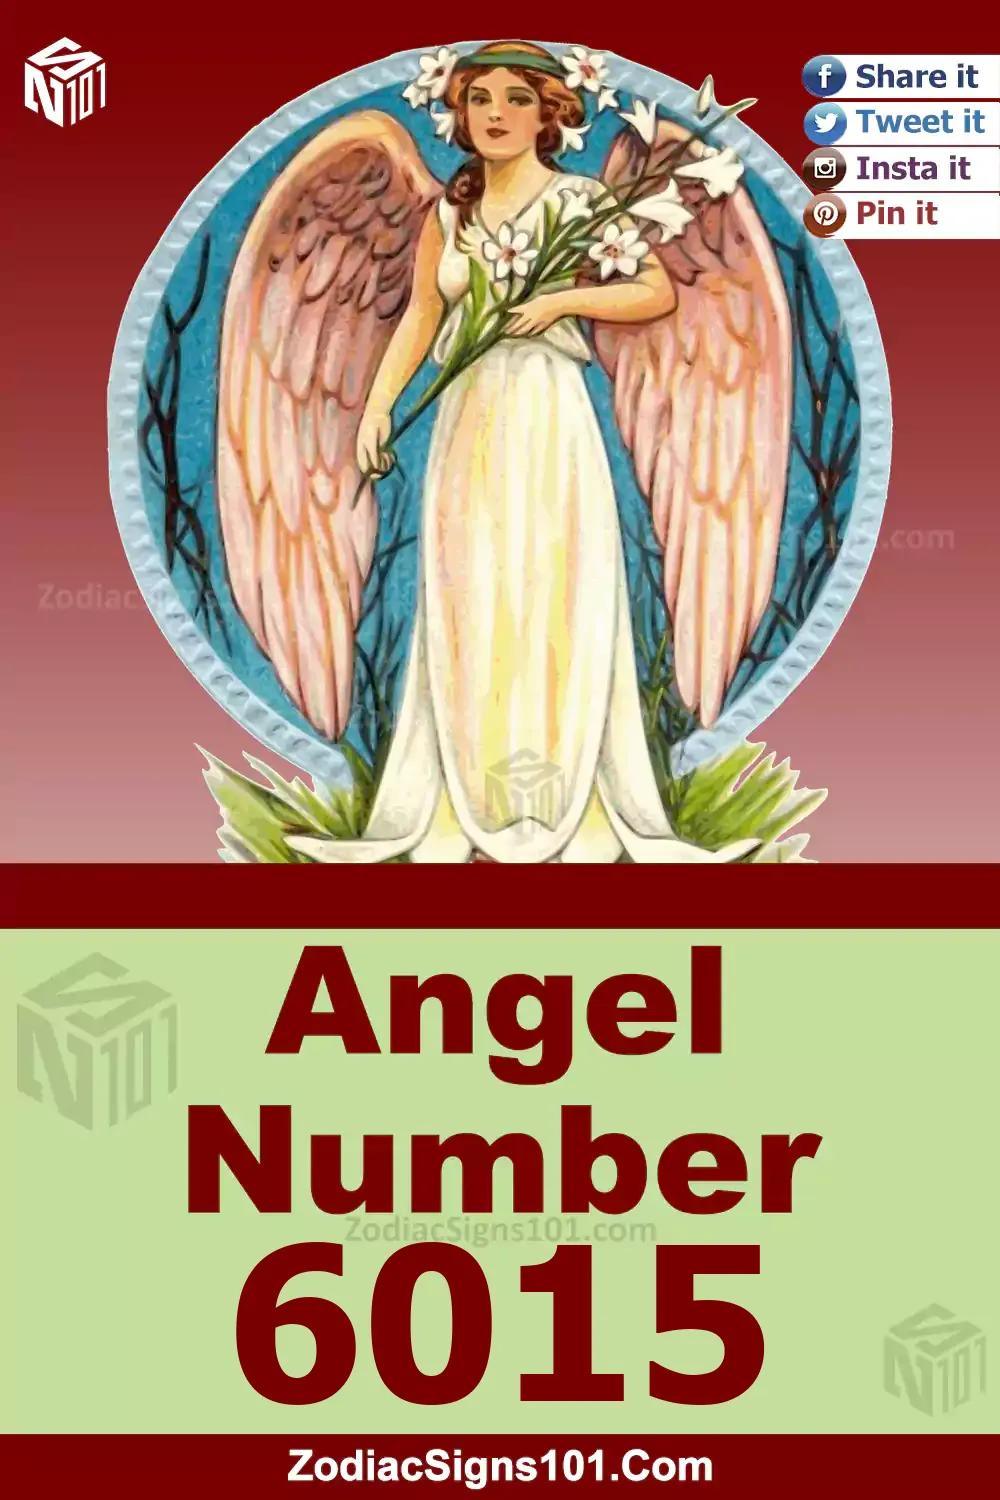 6015-Angel-Number-Meaning.jpg